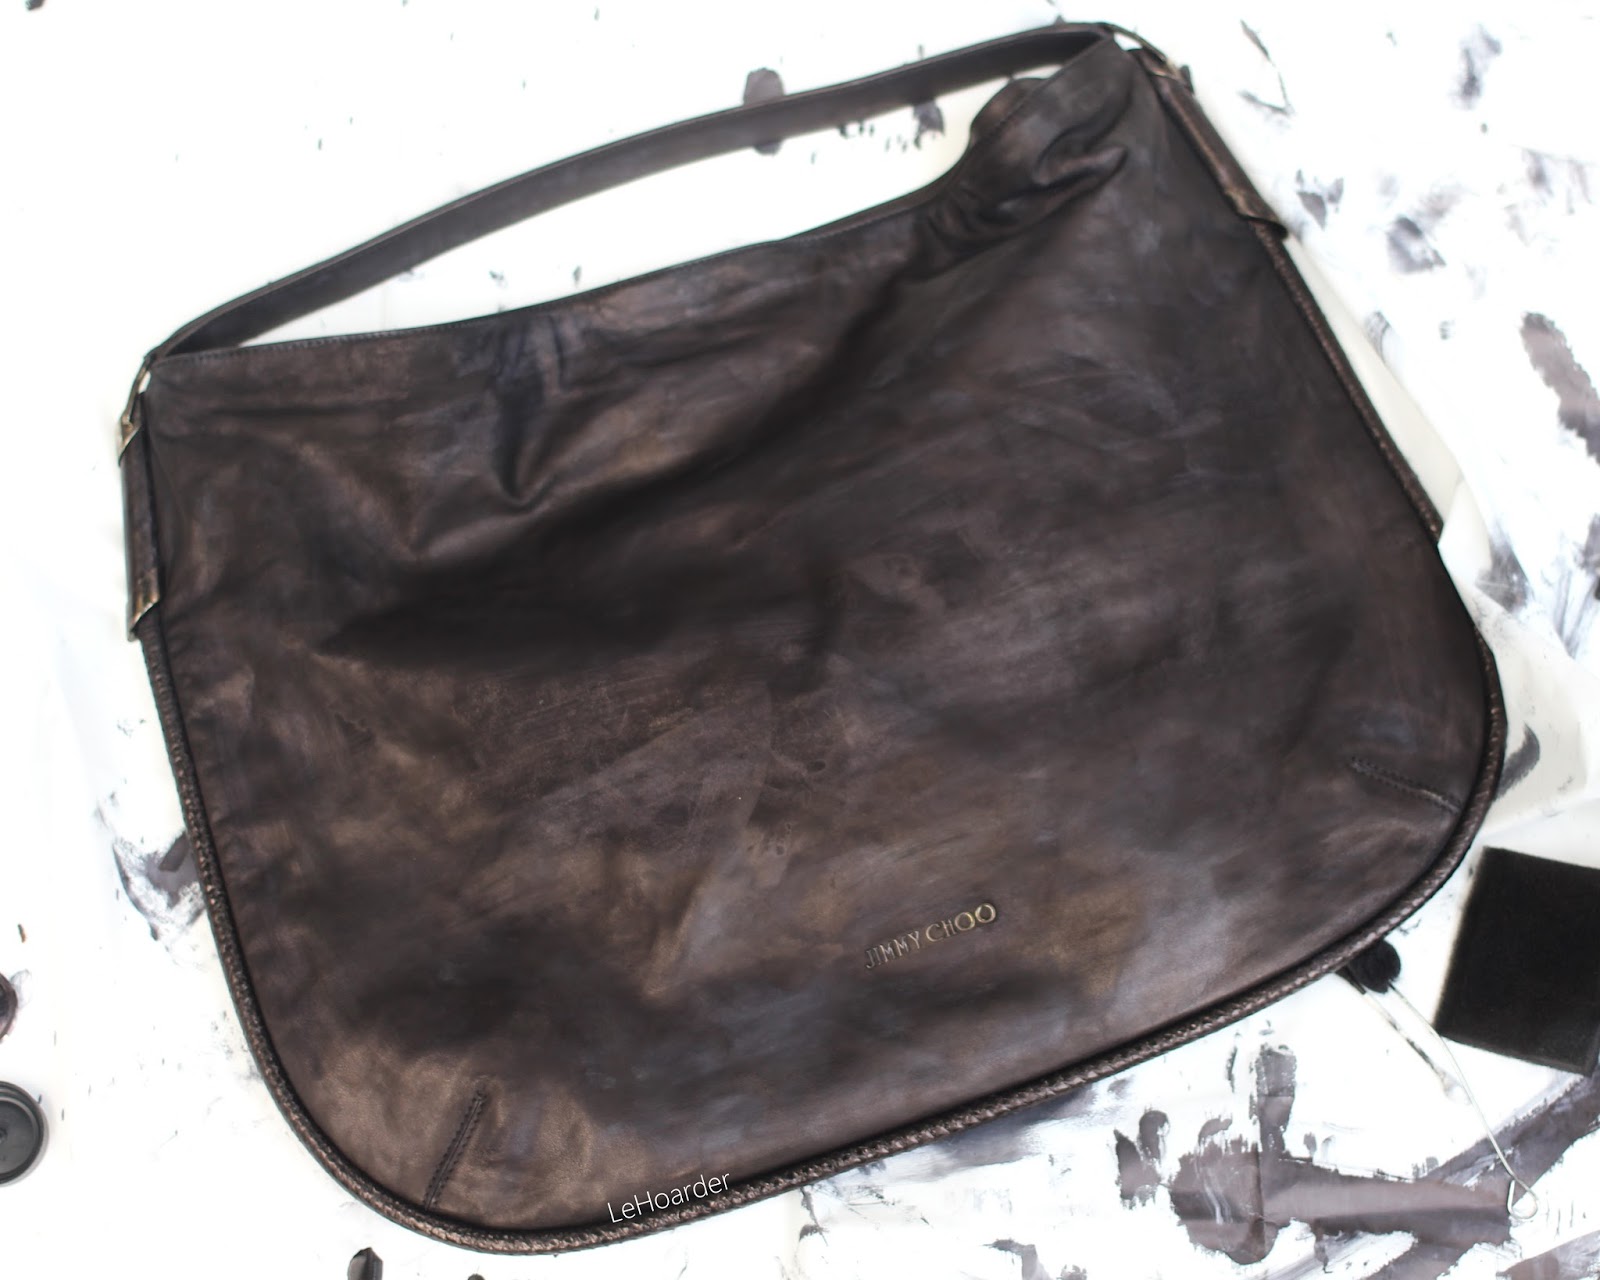 How to Dye a Leather Bag; My $50 Jimmy Choo Sample Sale Score! | Le Hoarder